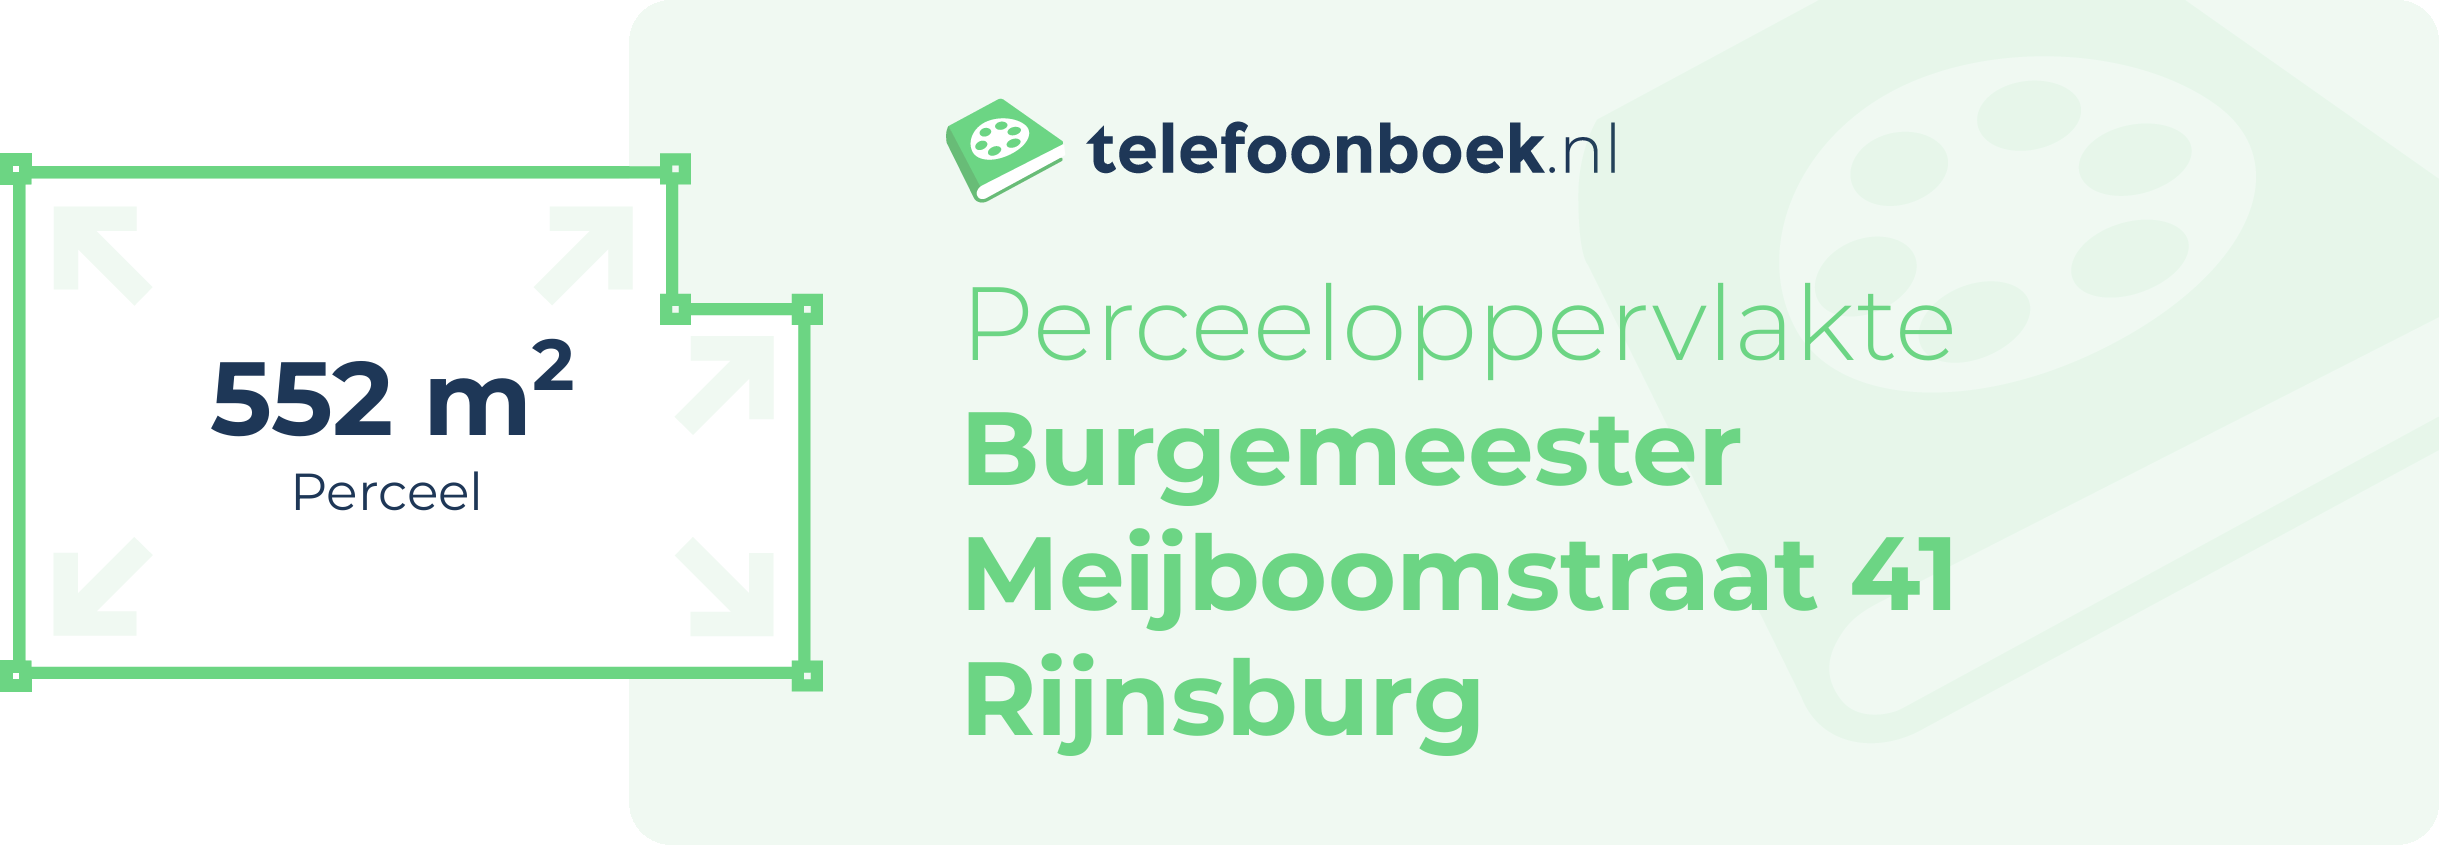 Perceeloppervlakte Burgemeester Meijboomstraat 41 Rijnsburg